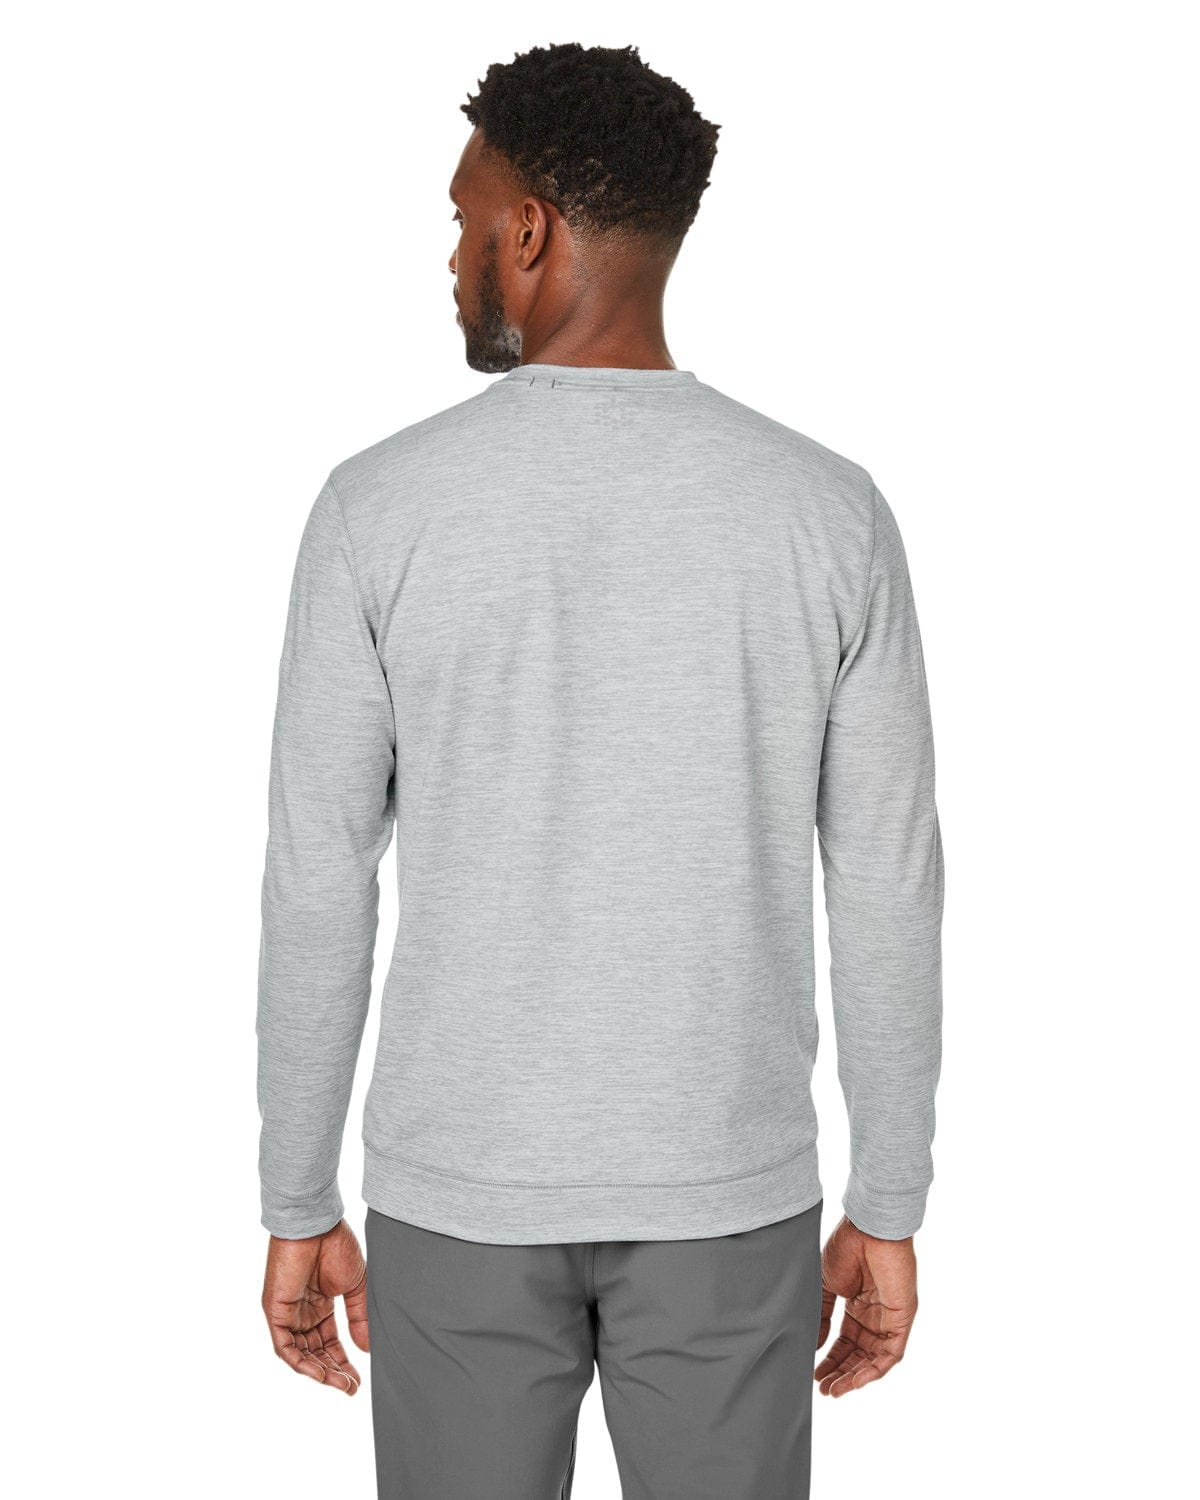 Puma Tees - Long Sleeve Shirts for Men - Poshmark